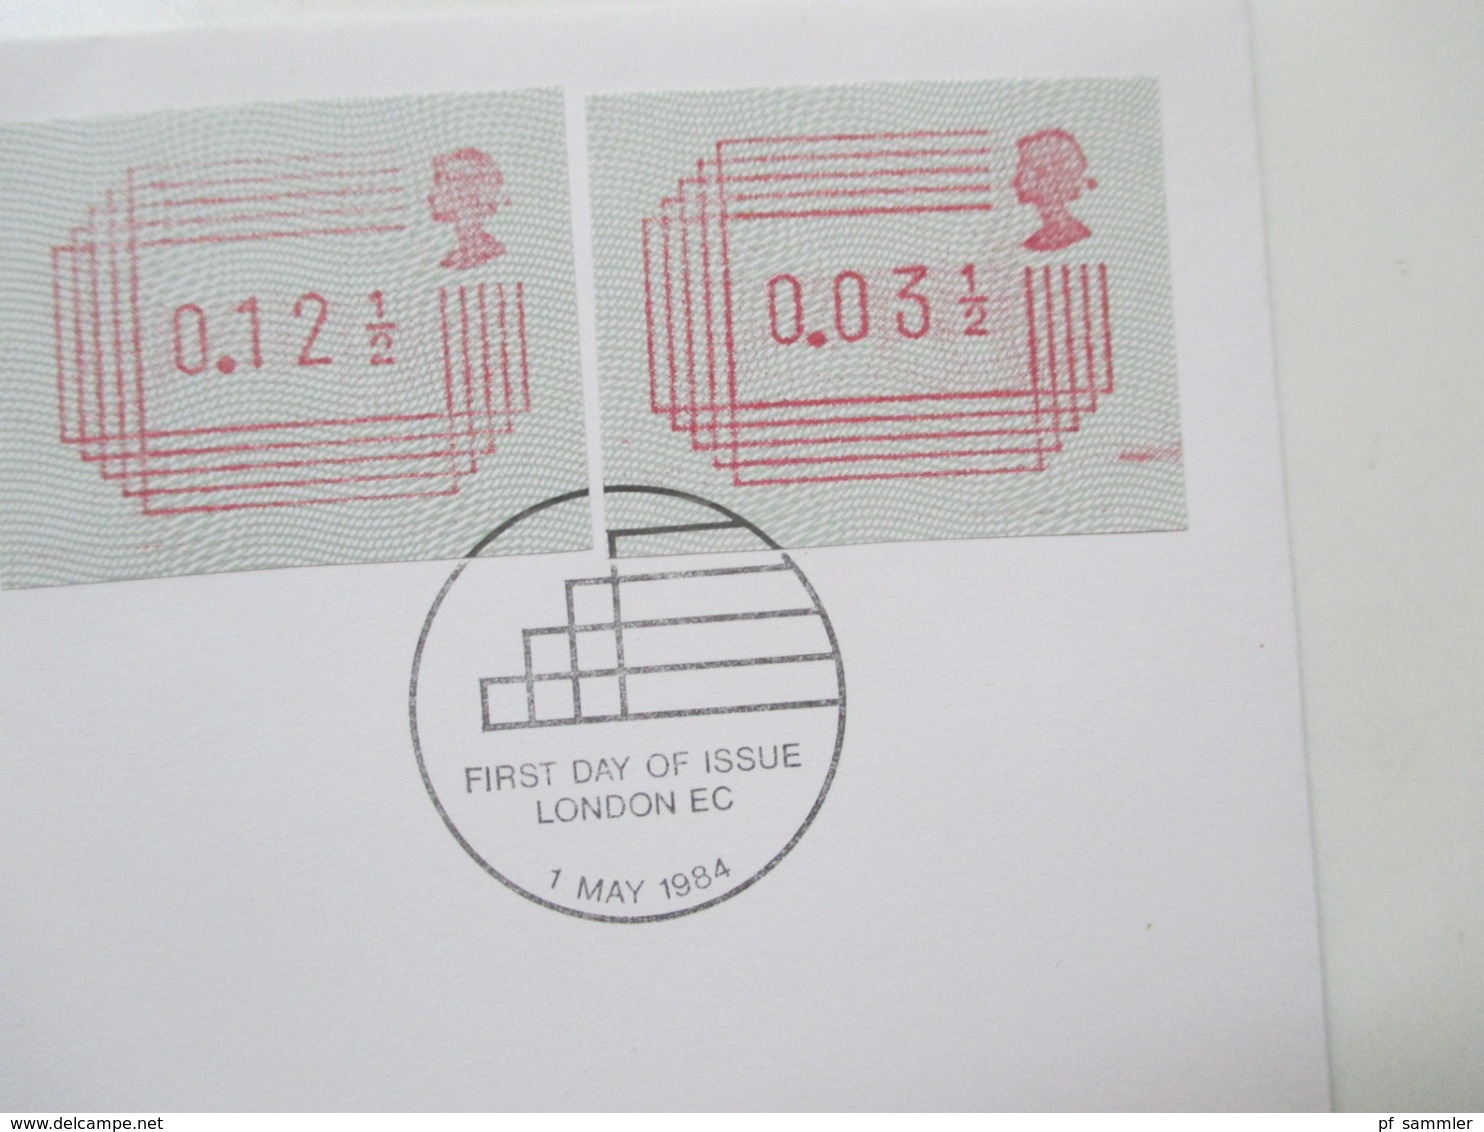 GB ATM 1984 4 Verschiedene FDC / Stempel London, Southampton, Windsor Berks, Cambridge Royal Mail Postage Labels - Briefe U. Dokumente